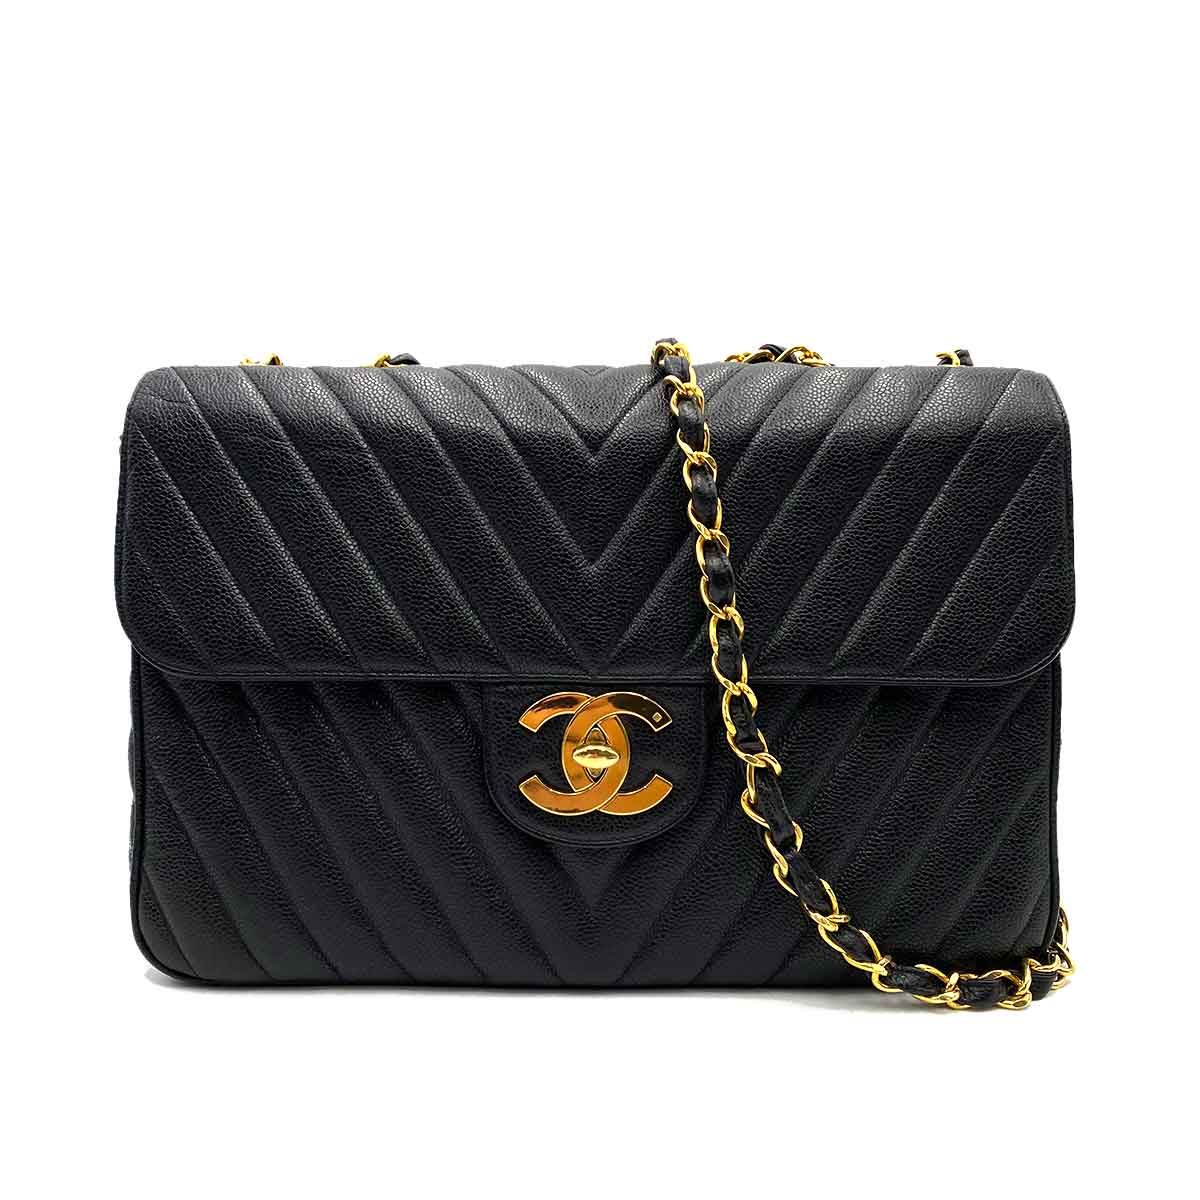 Chanel CHANEL VINTAGE CHEVRON CHAIN SHOULDER BAG BLACK CAVIR SKIN 90229335